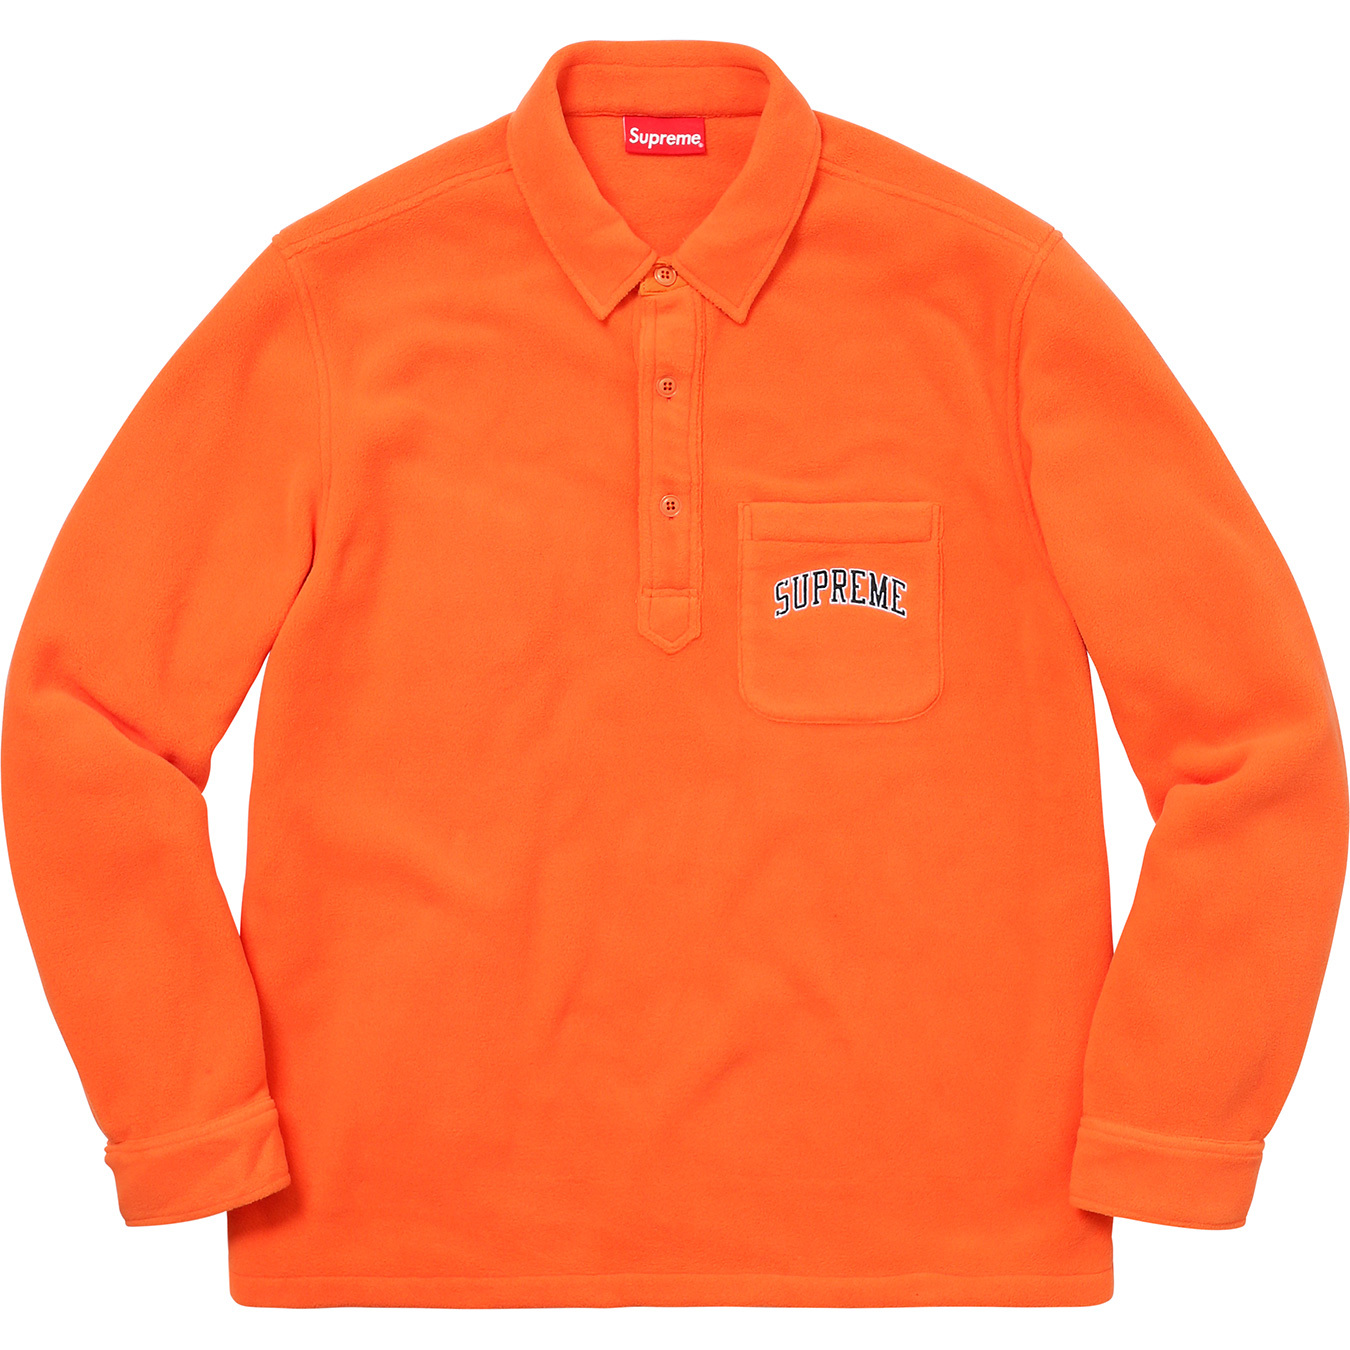 Supreme Polartec Pullover Shirt Orange Men's - FW17 - US